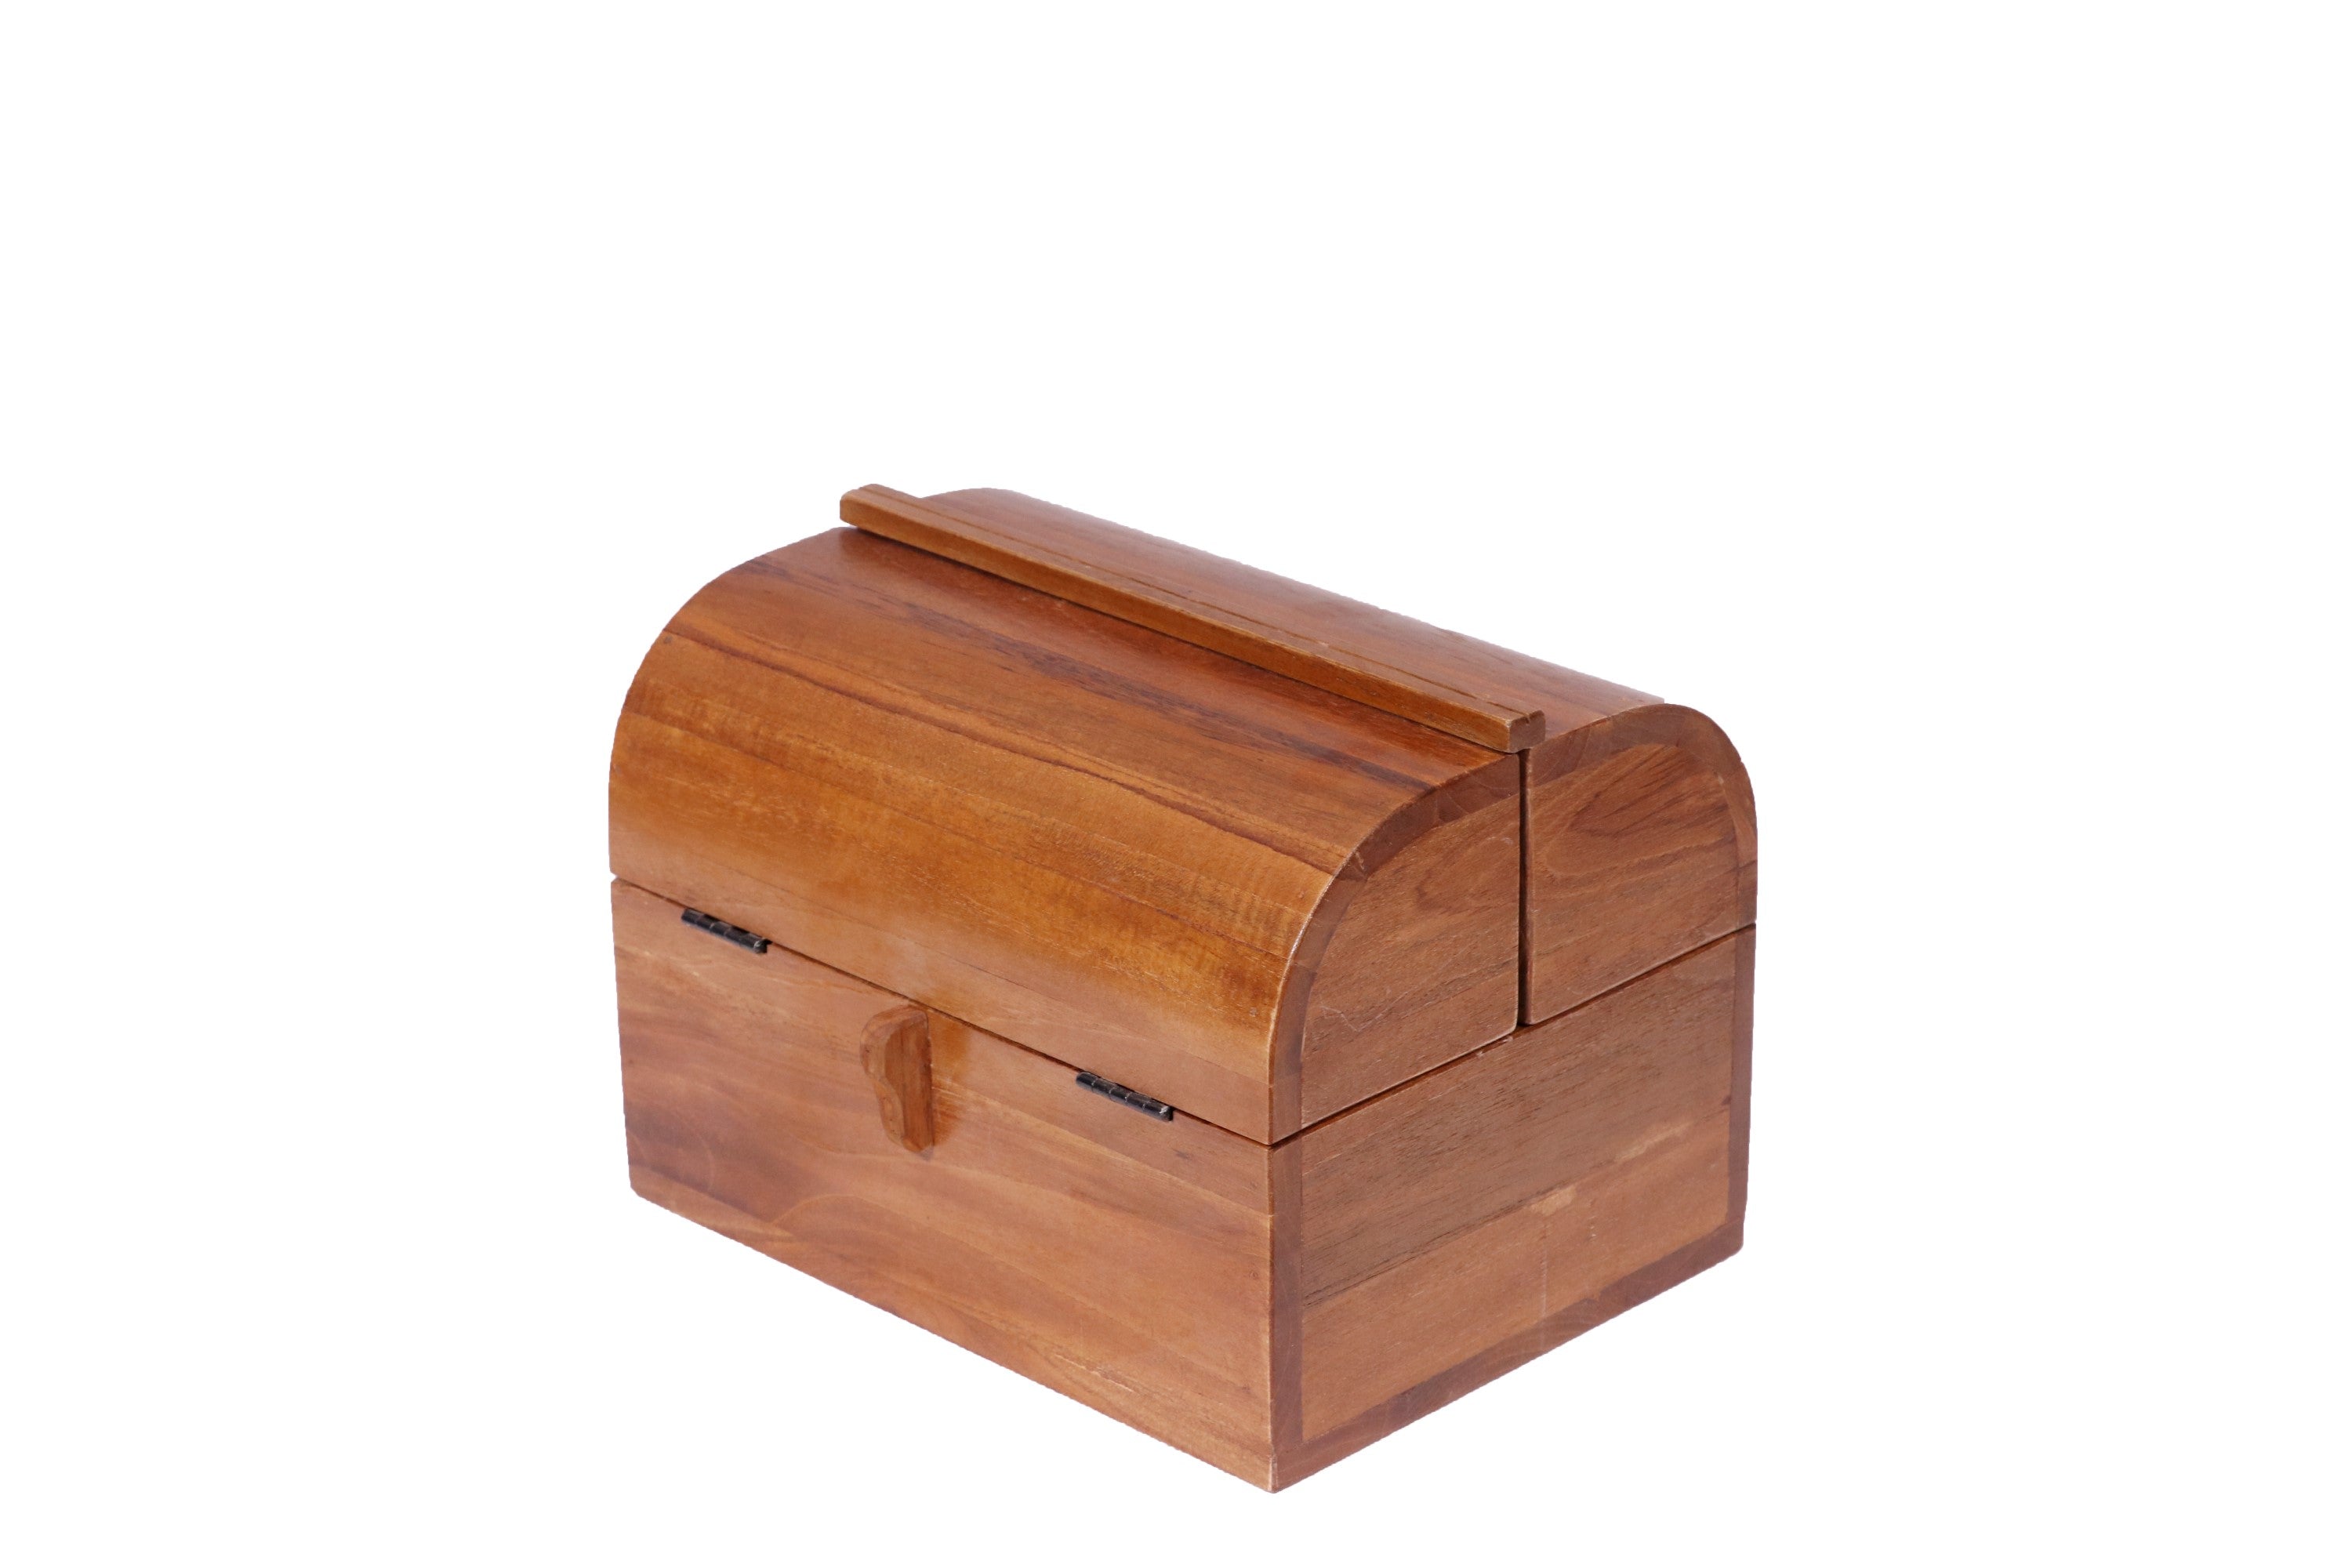 Double Door Box Small (10 x 7.5 x 7.5 Inch) Wooden Box